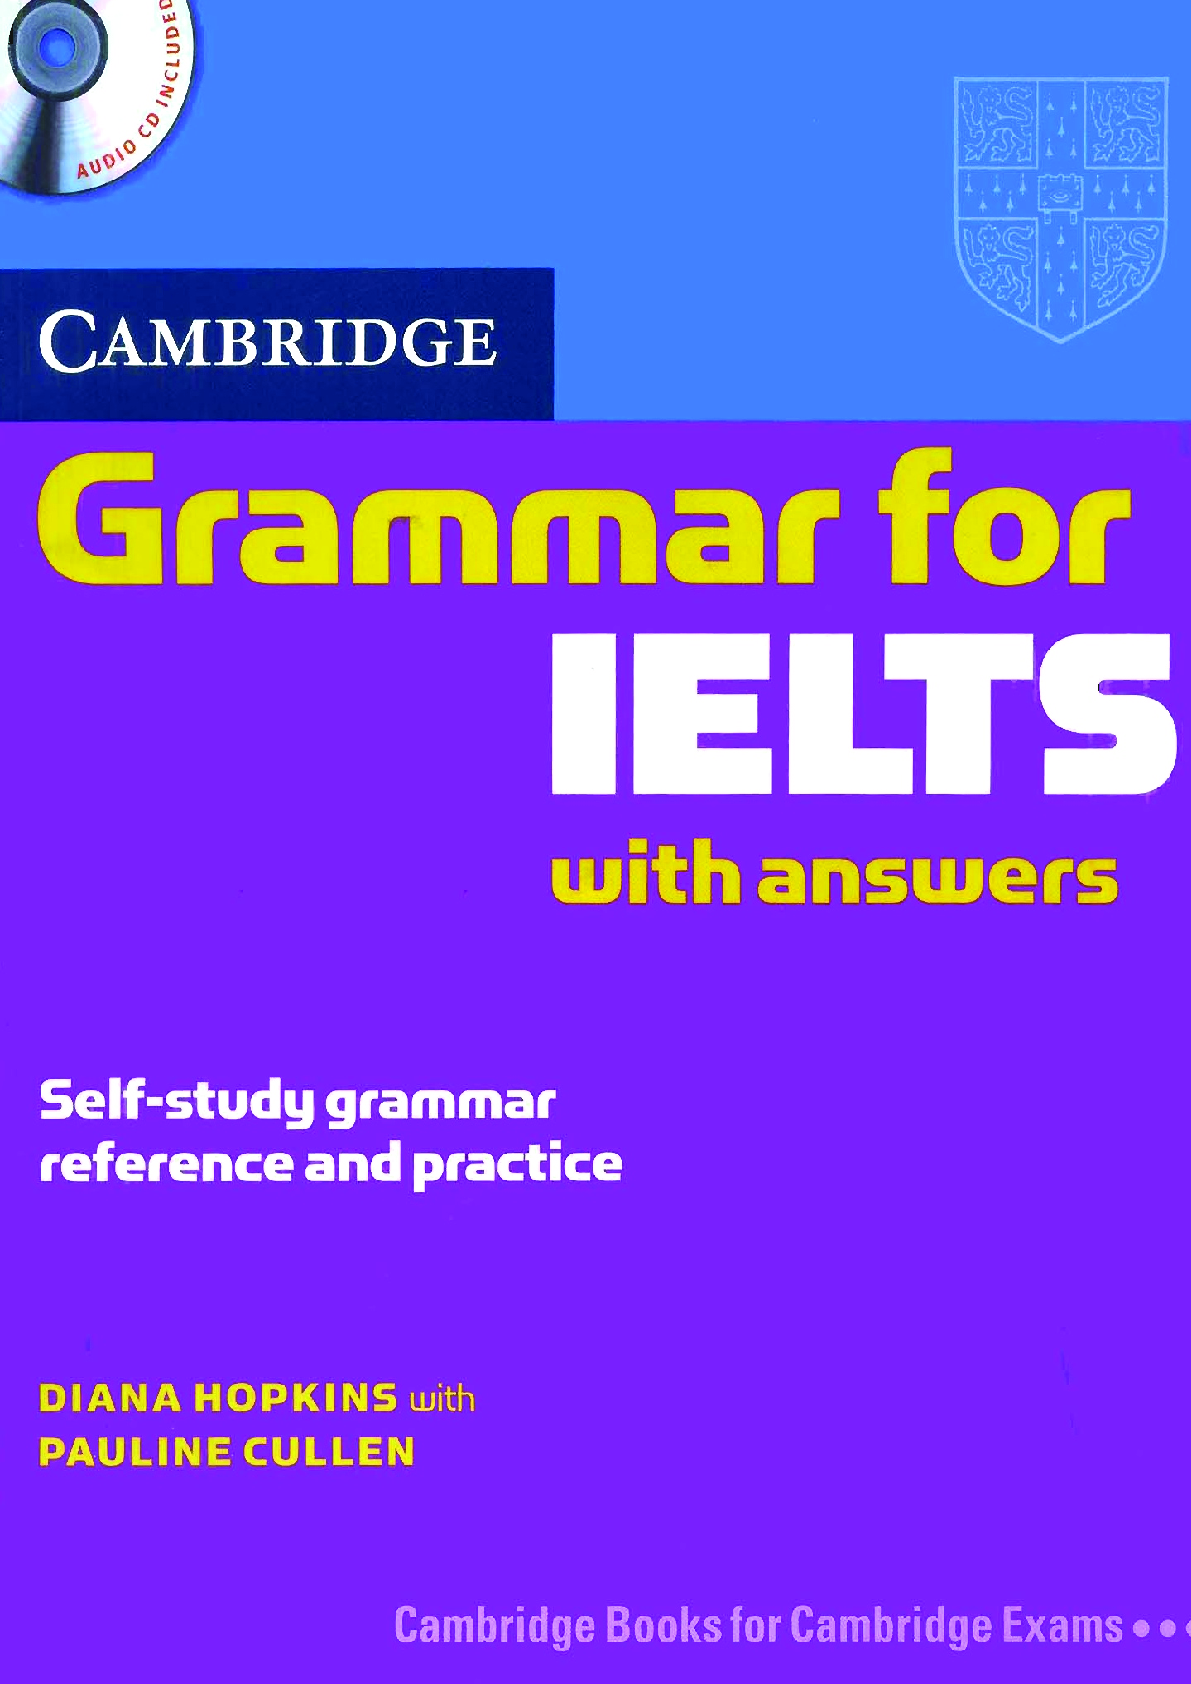 Sách Cambridge Grammar for IELTS pdf | Xem online, tải PDF miễn phí (trang 1)